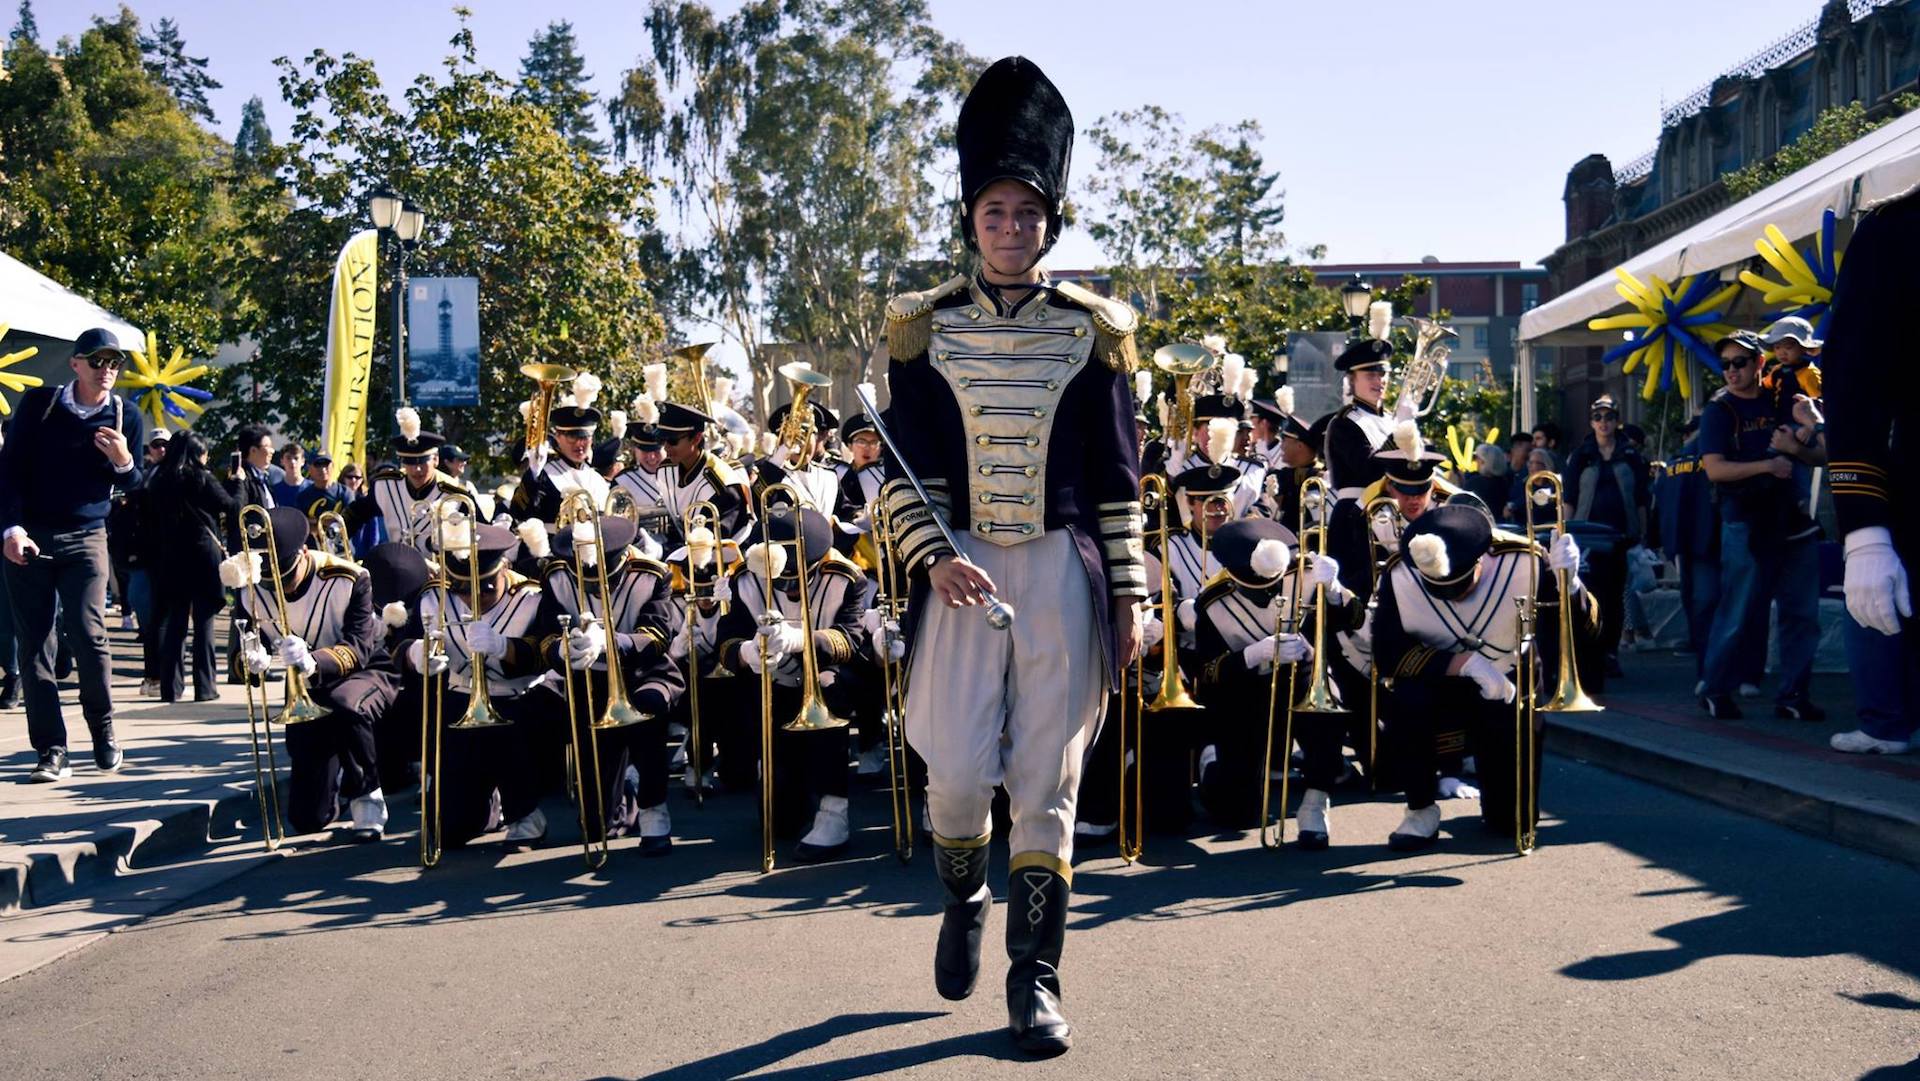 University of California Marching Band